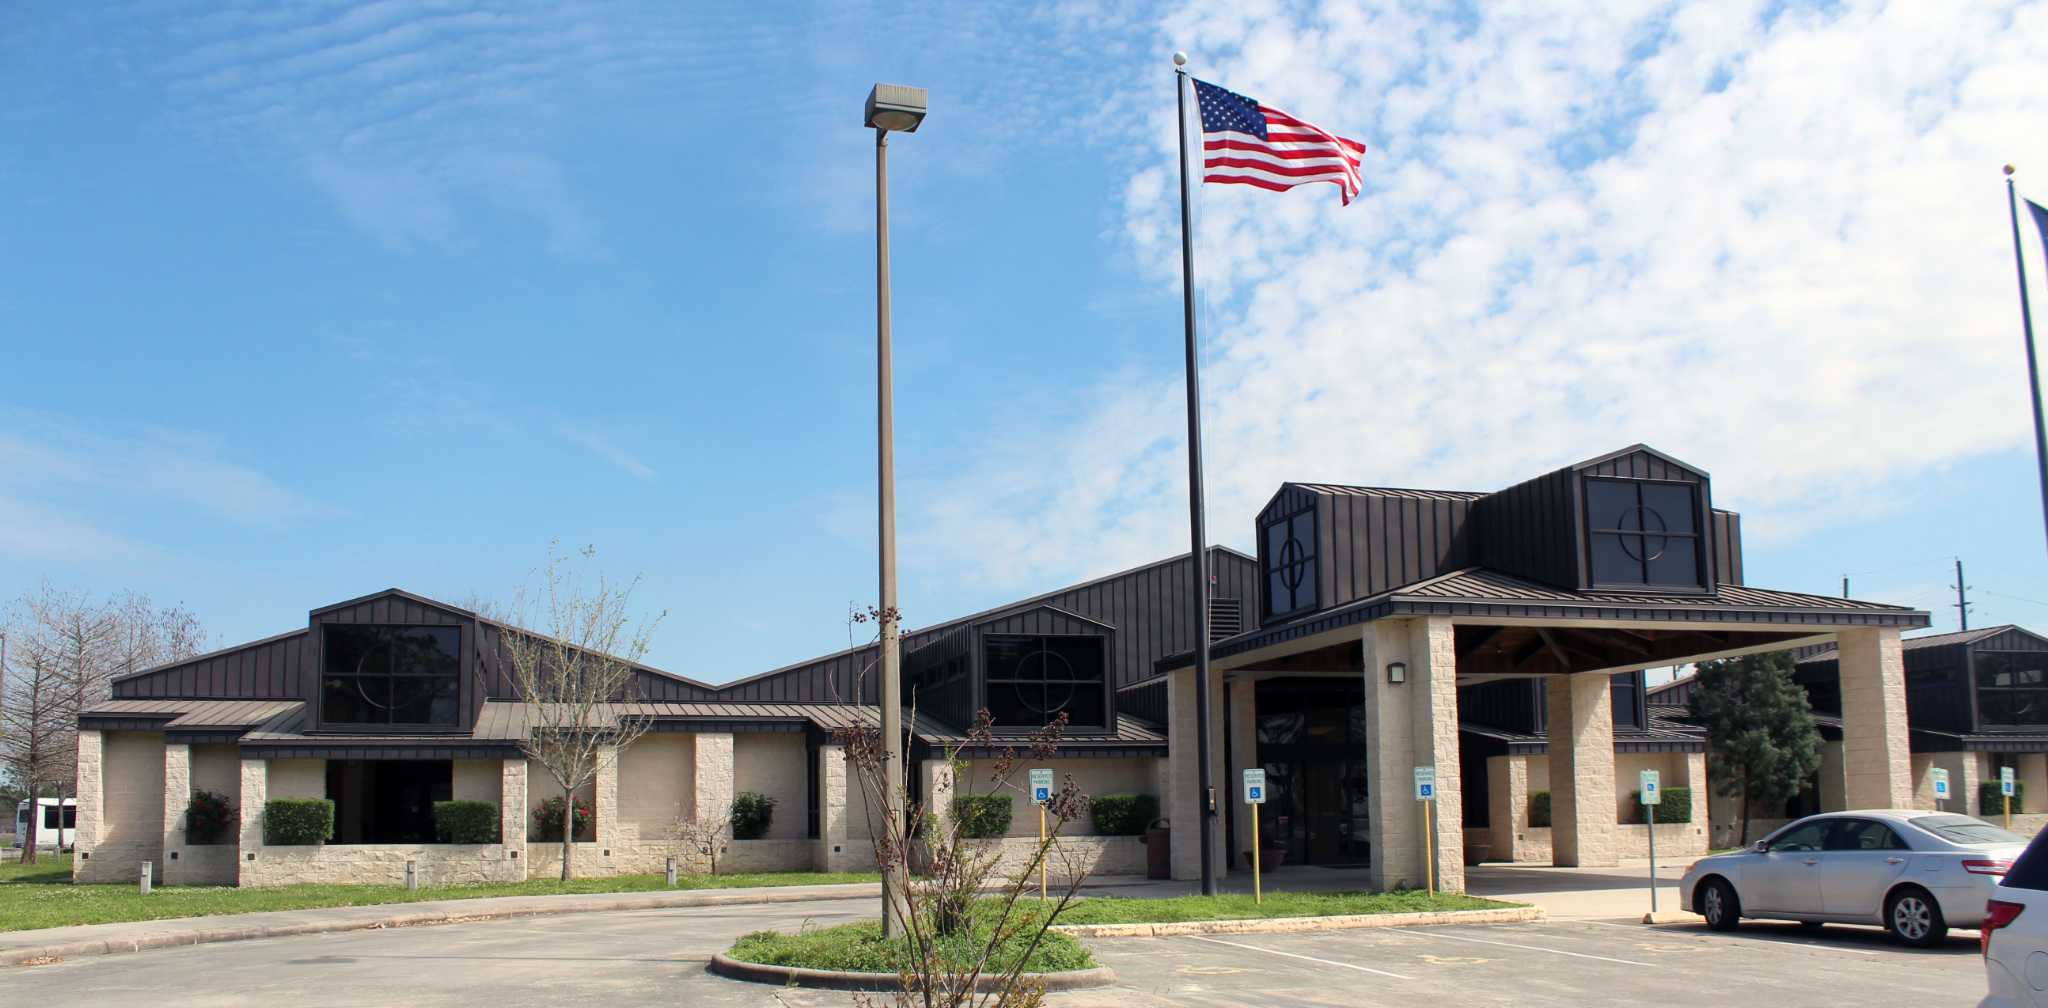 Huffman history May Community Center hosts events near Lake Houston